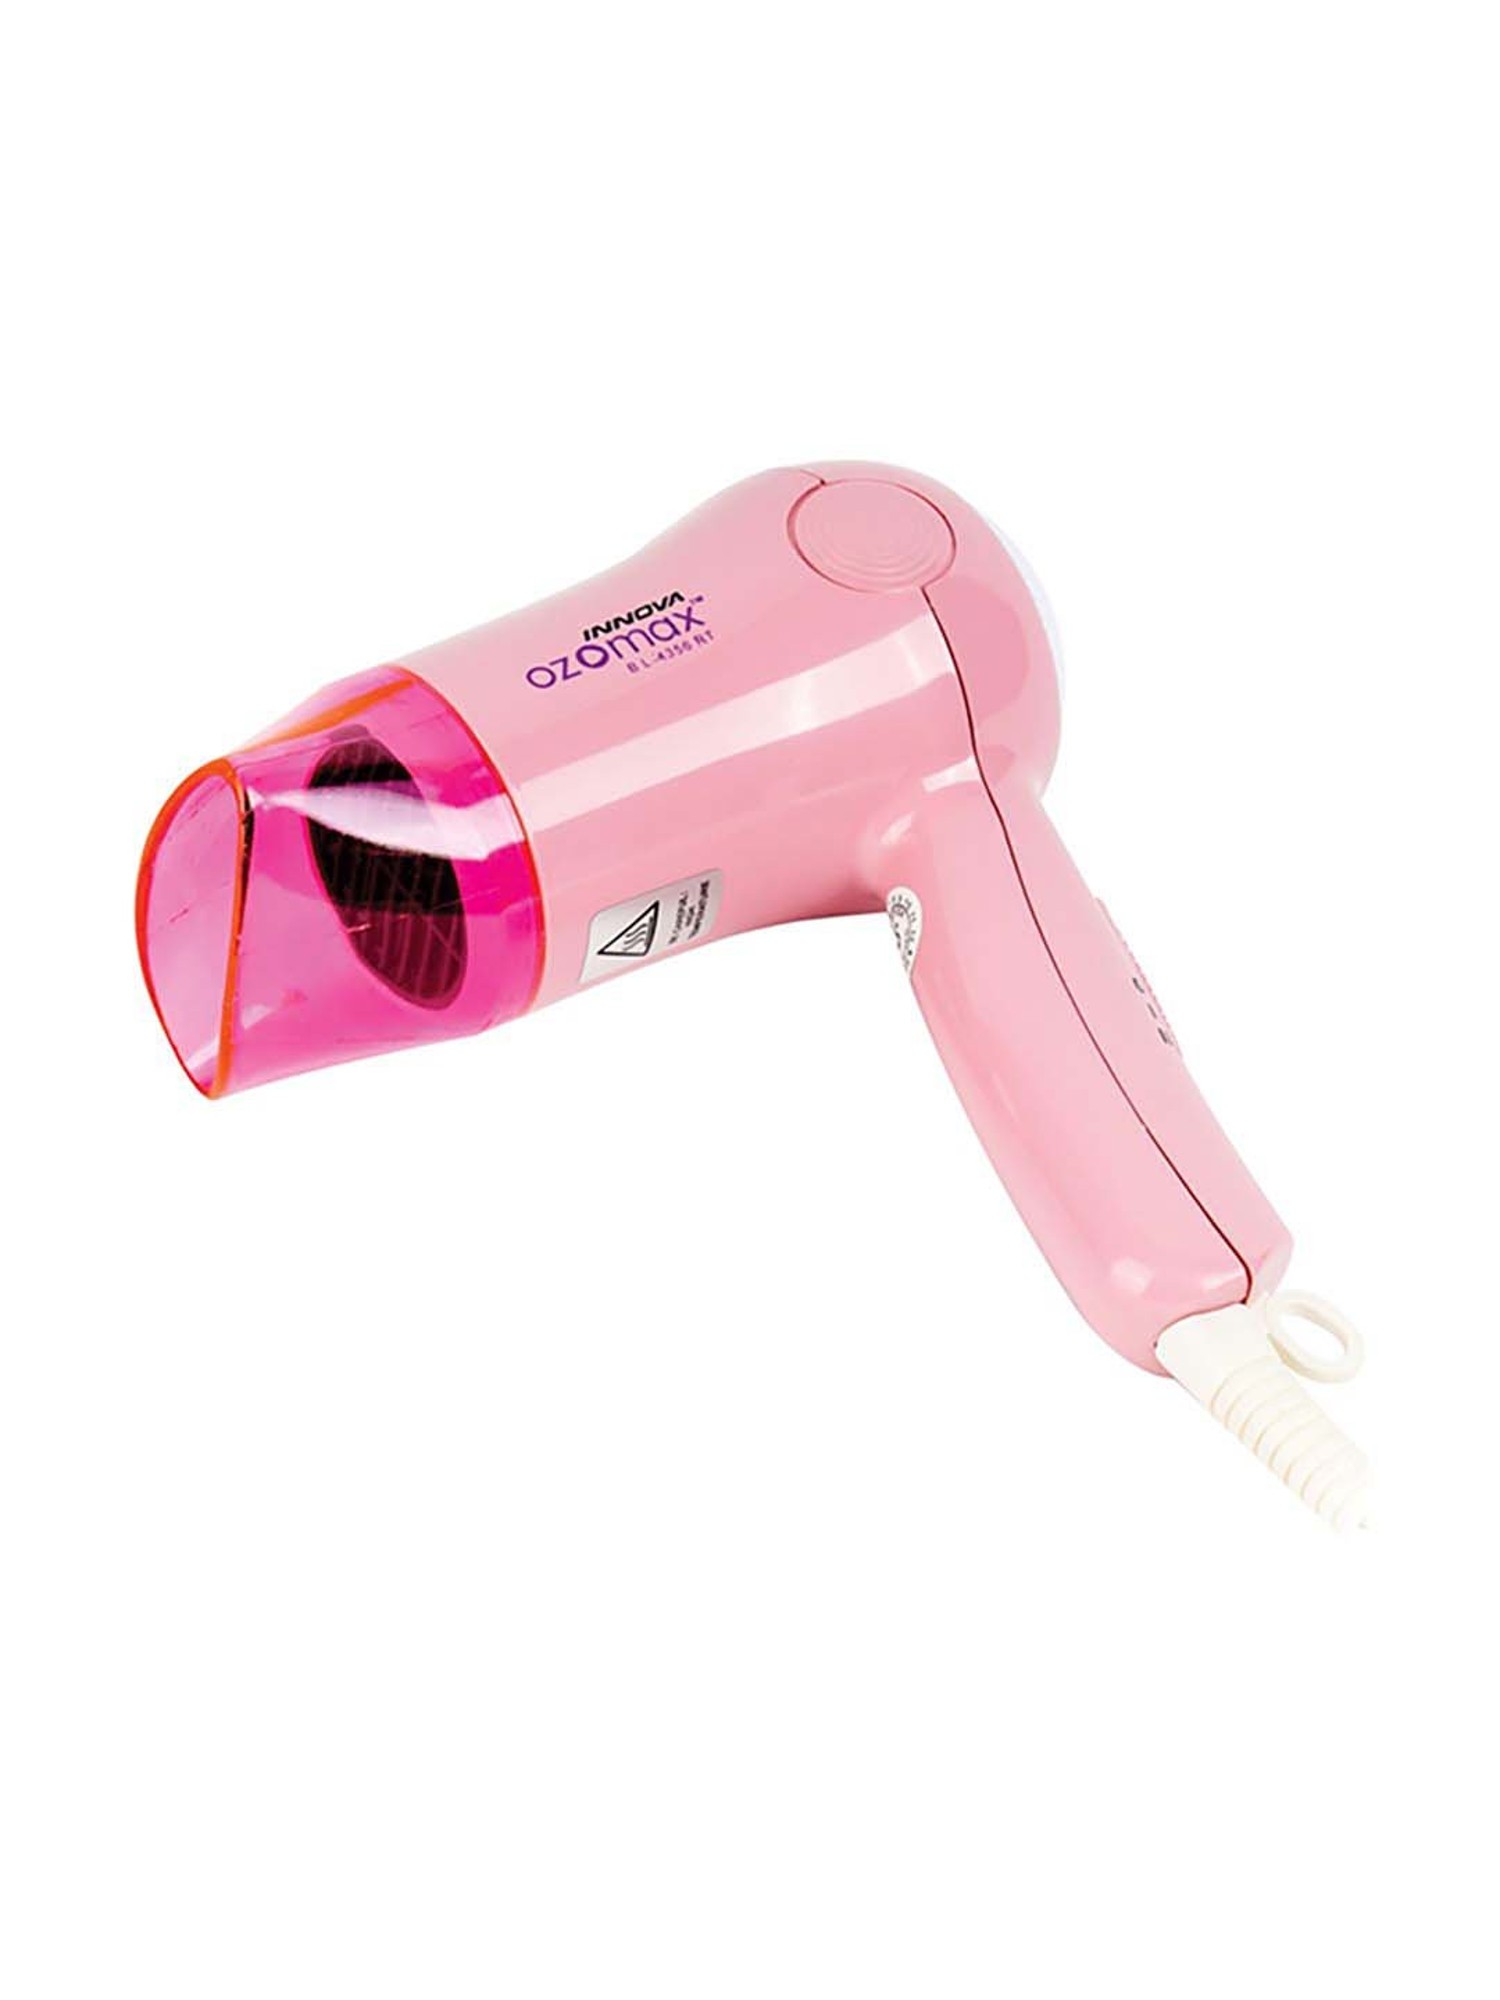 IKONIC Atom Mini Hair Dryer Pink 1100 Watts  Amazonin Beauty